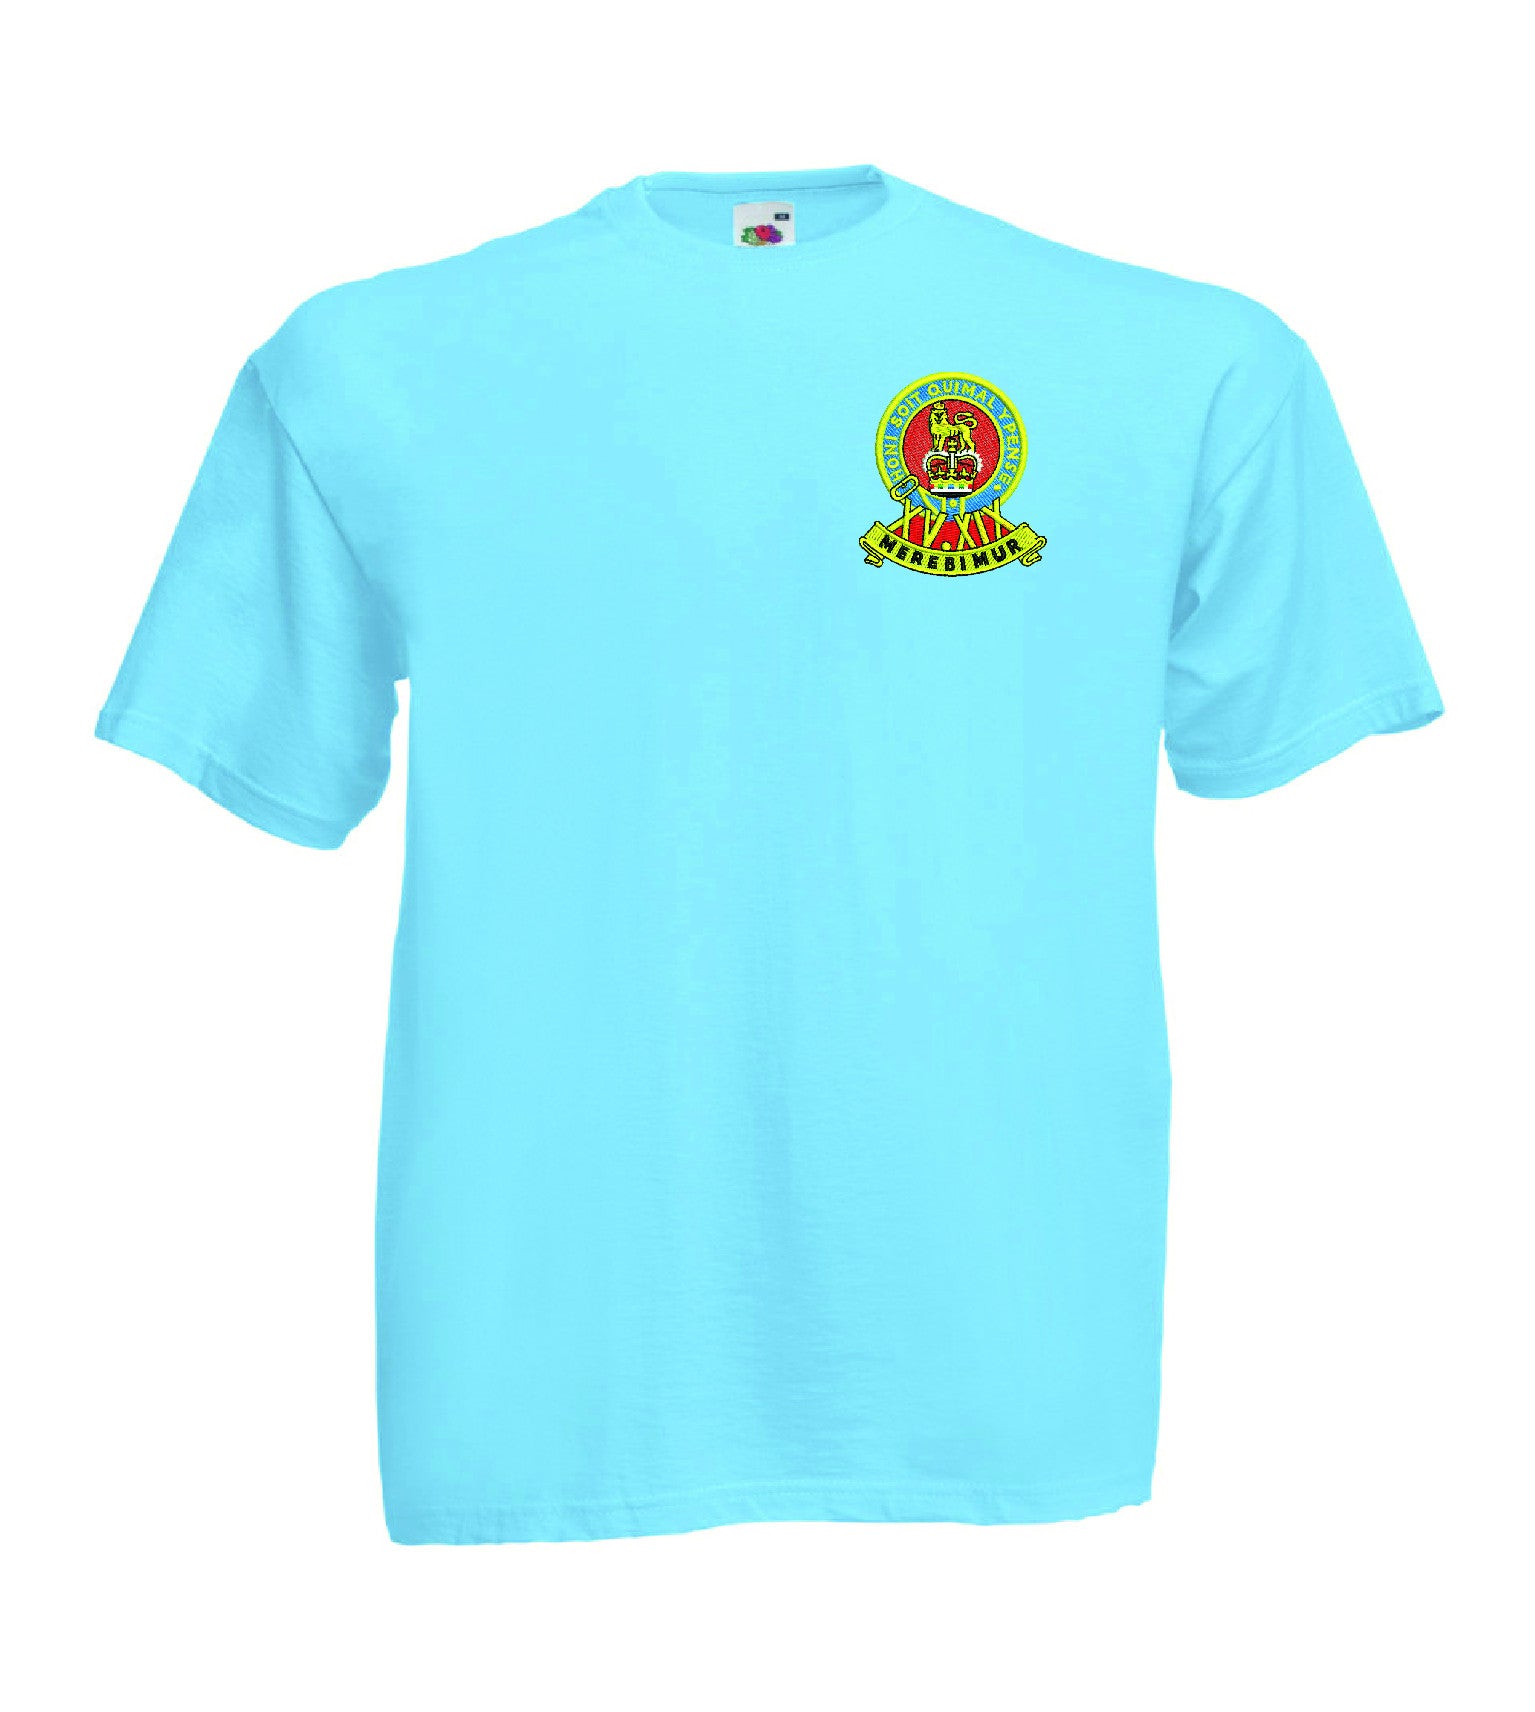 15th/19th Royal Kings Hussars T-Shirts